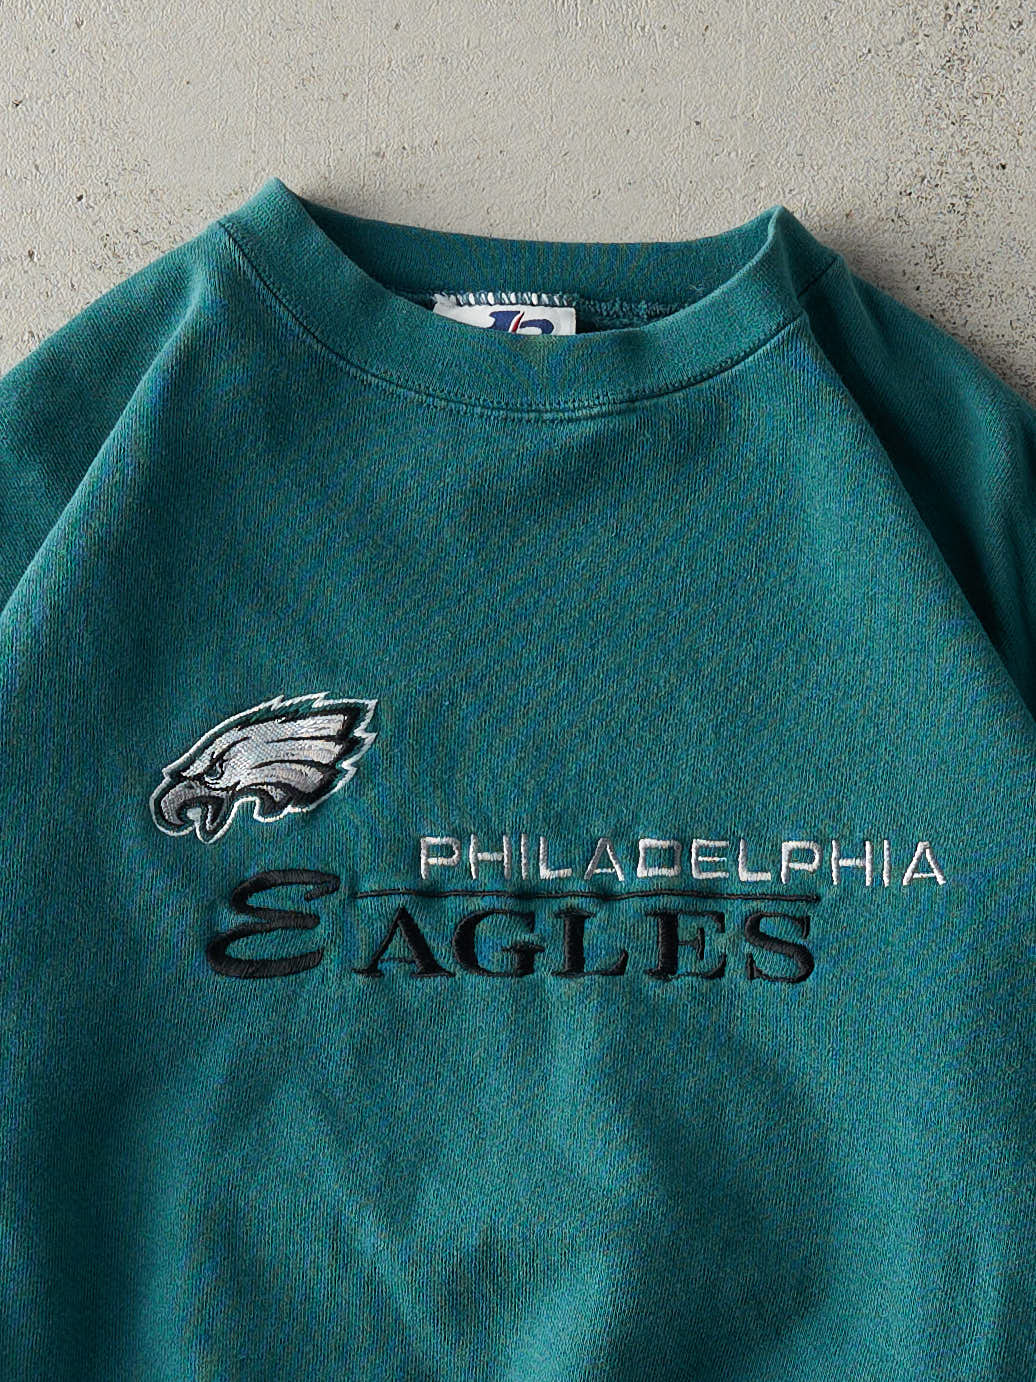 Vintage 90s Teal Philadelphia Eagles Embroidered Boxy Crewneck (M)